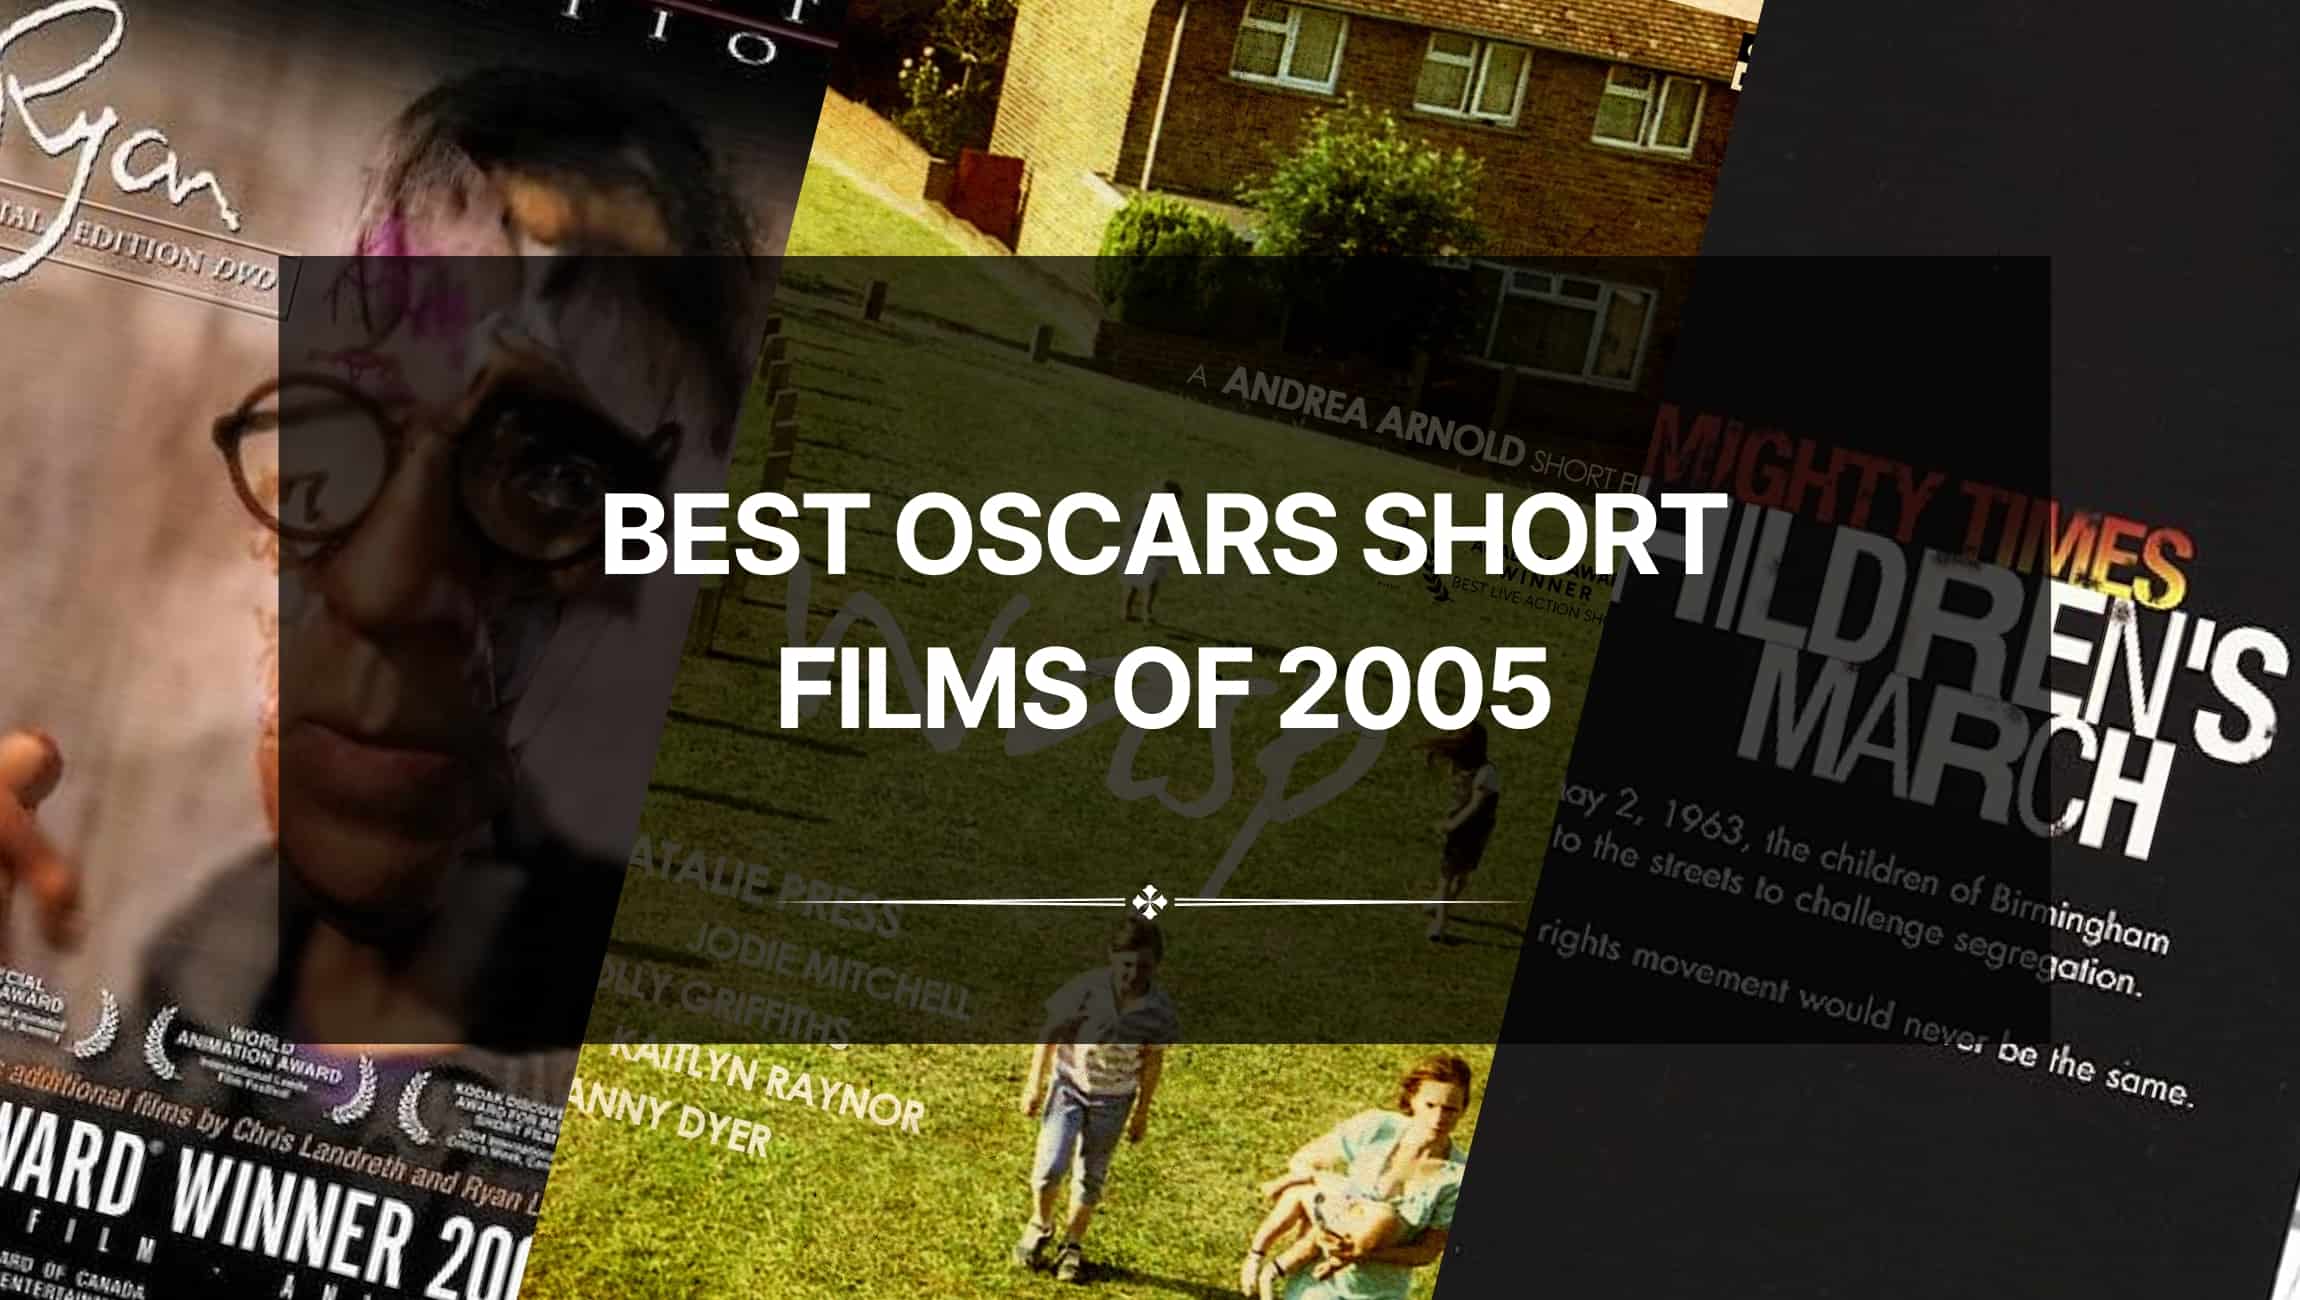 Best Oscars Short Films of 2005